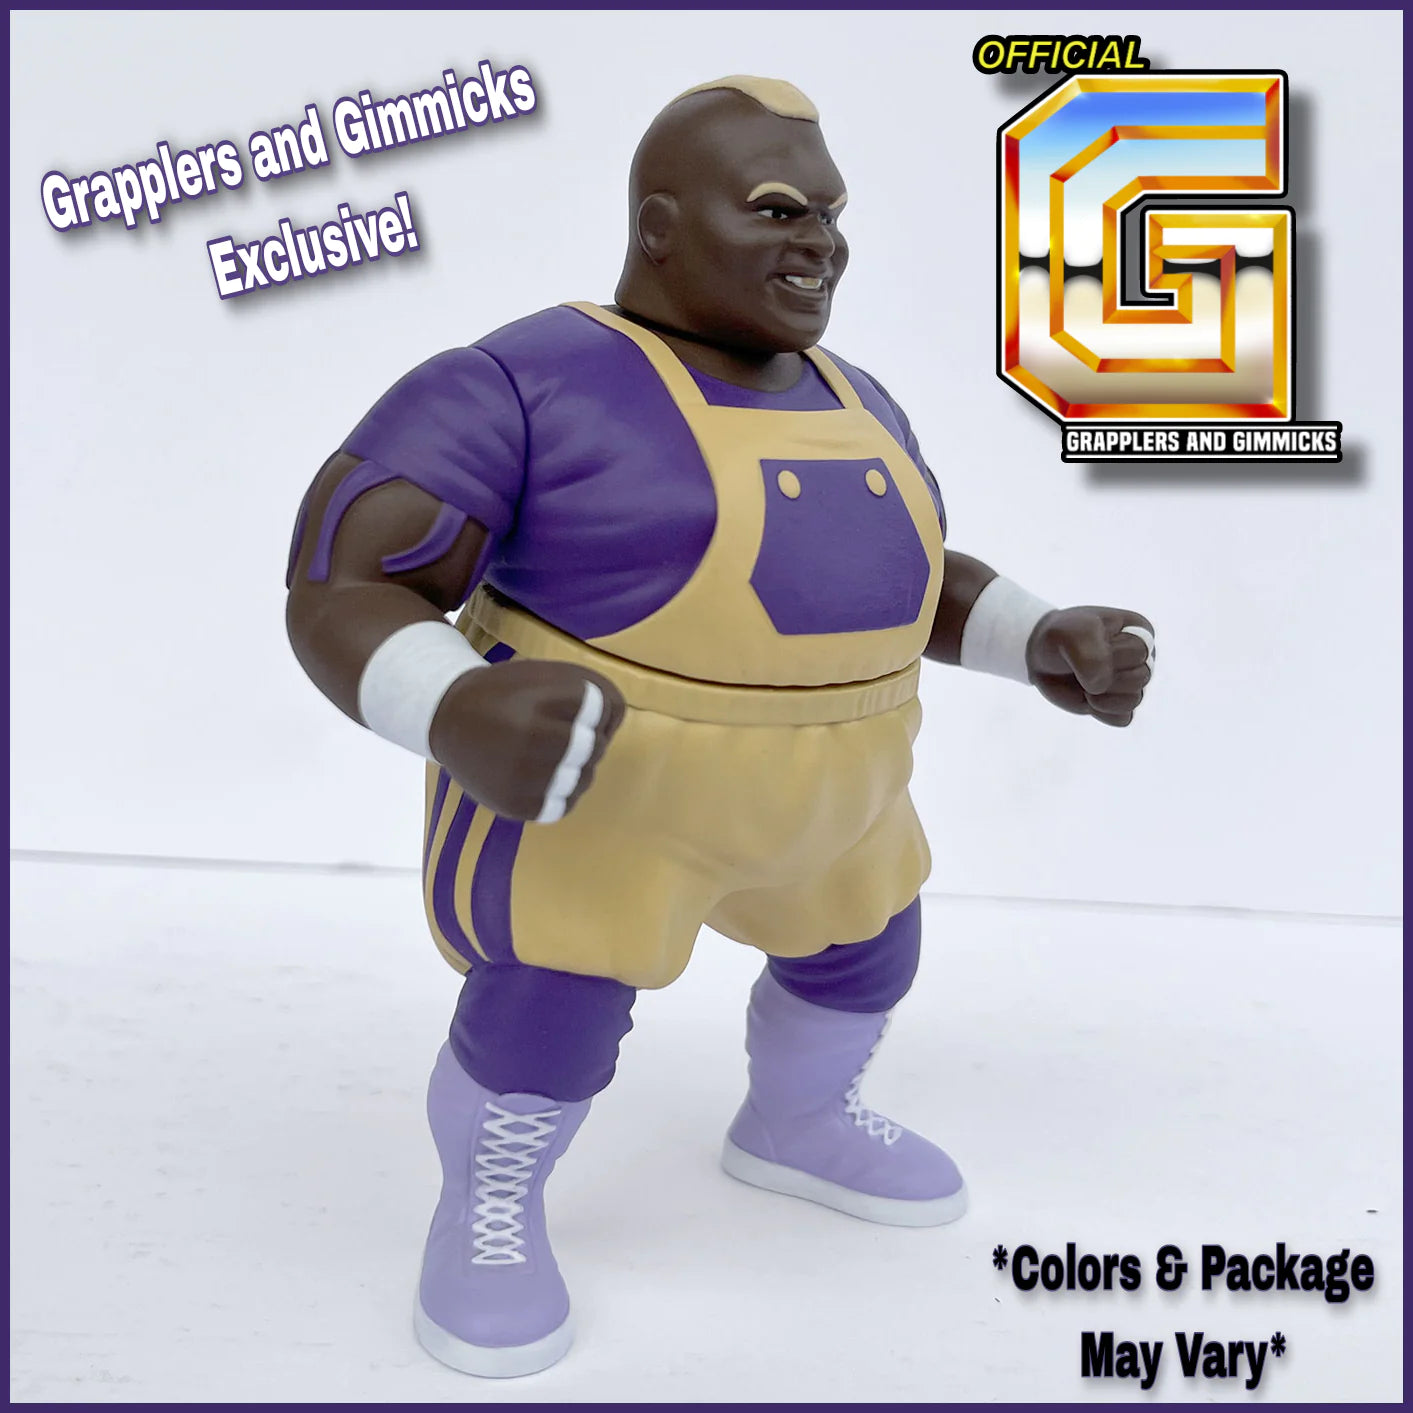 2023 Hasttel Toy Grapplers & Gimmicks Series 2 Nelson Frazier Jr. [Mabel]